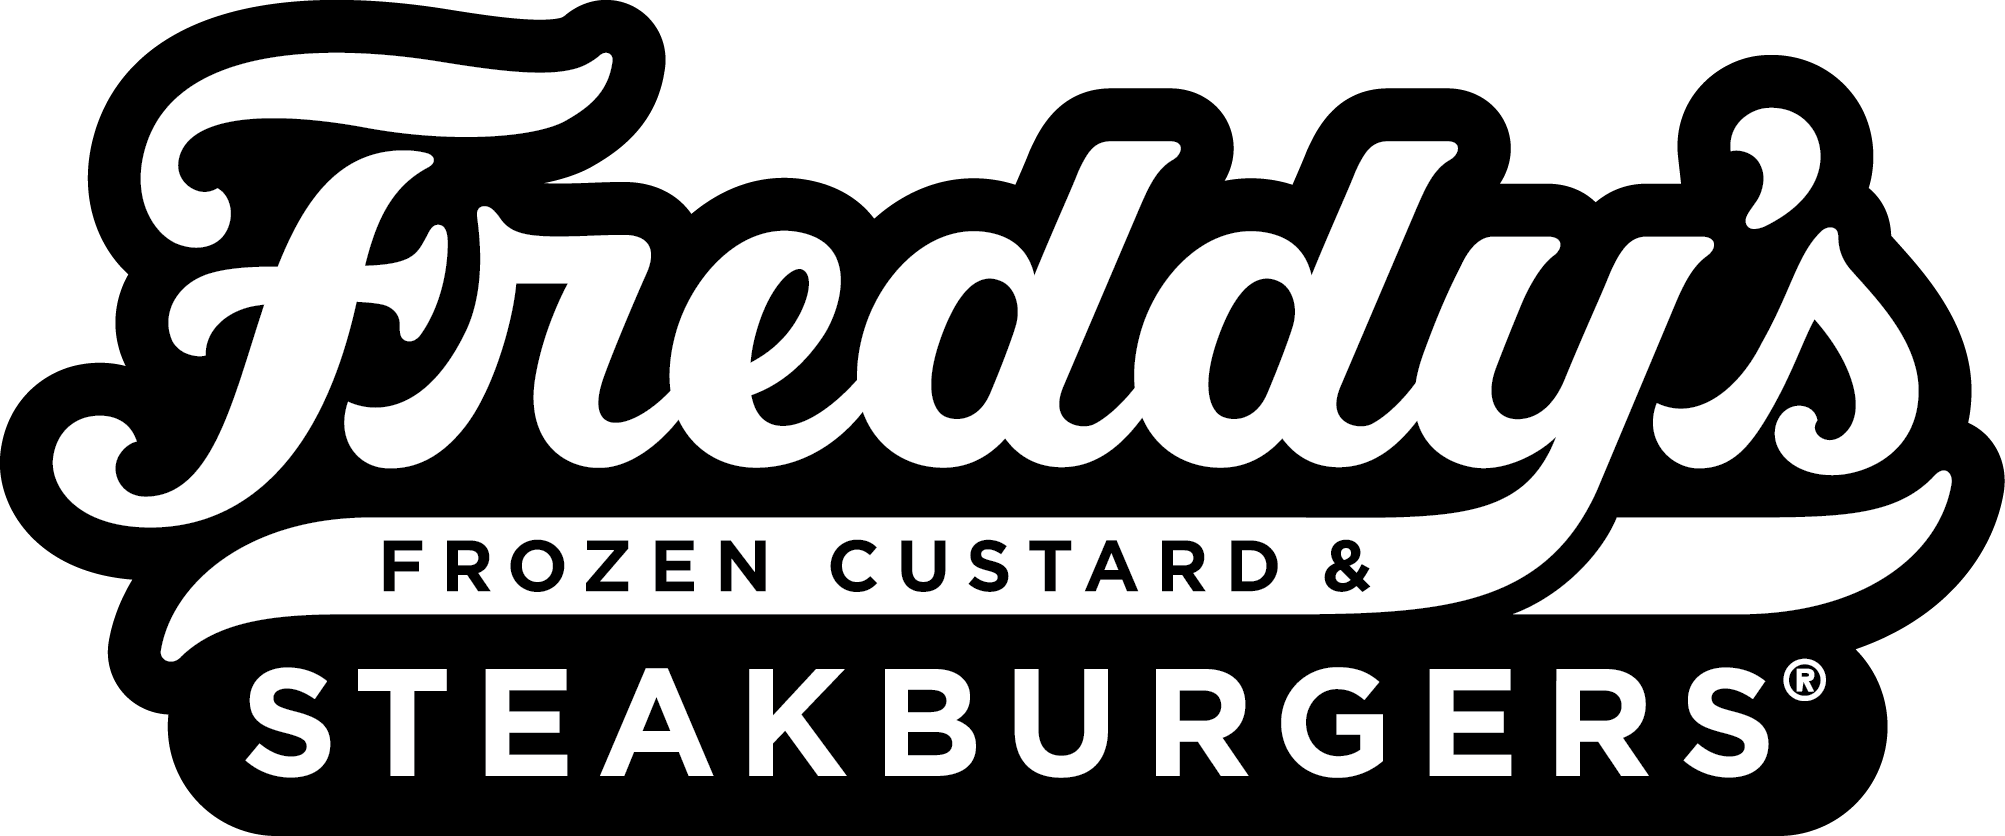 Freddy's Logo - Graphics Library's Frozen Custard & Steakburgers